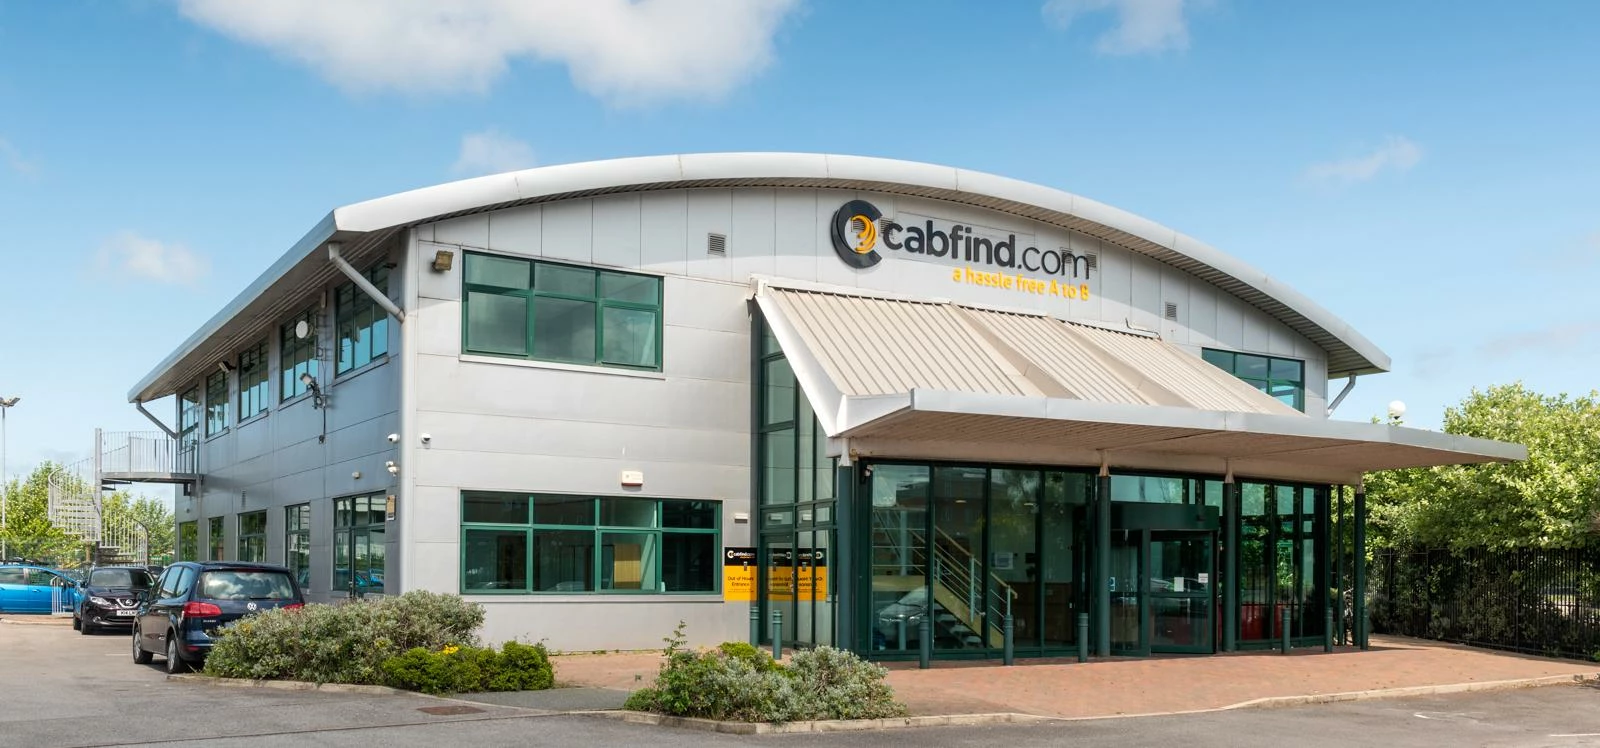 Cabfind.com head office